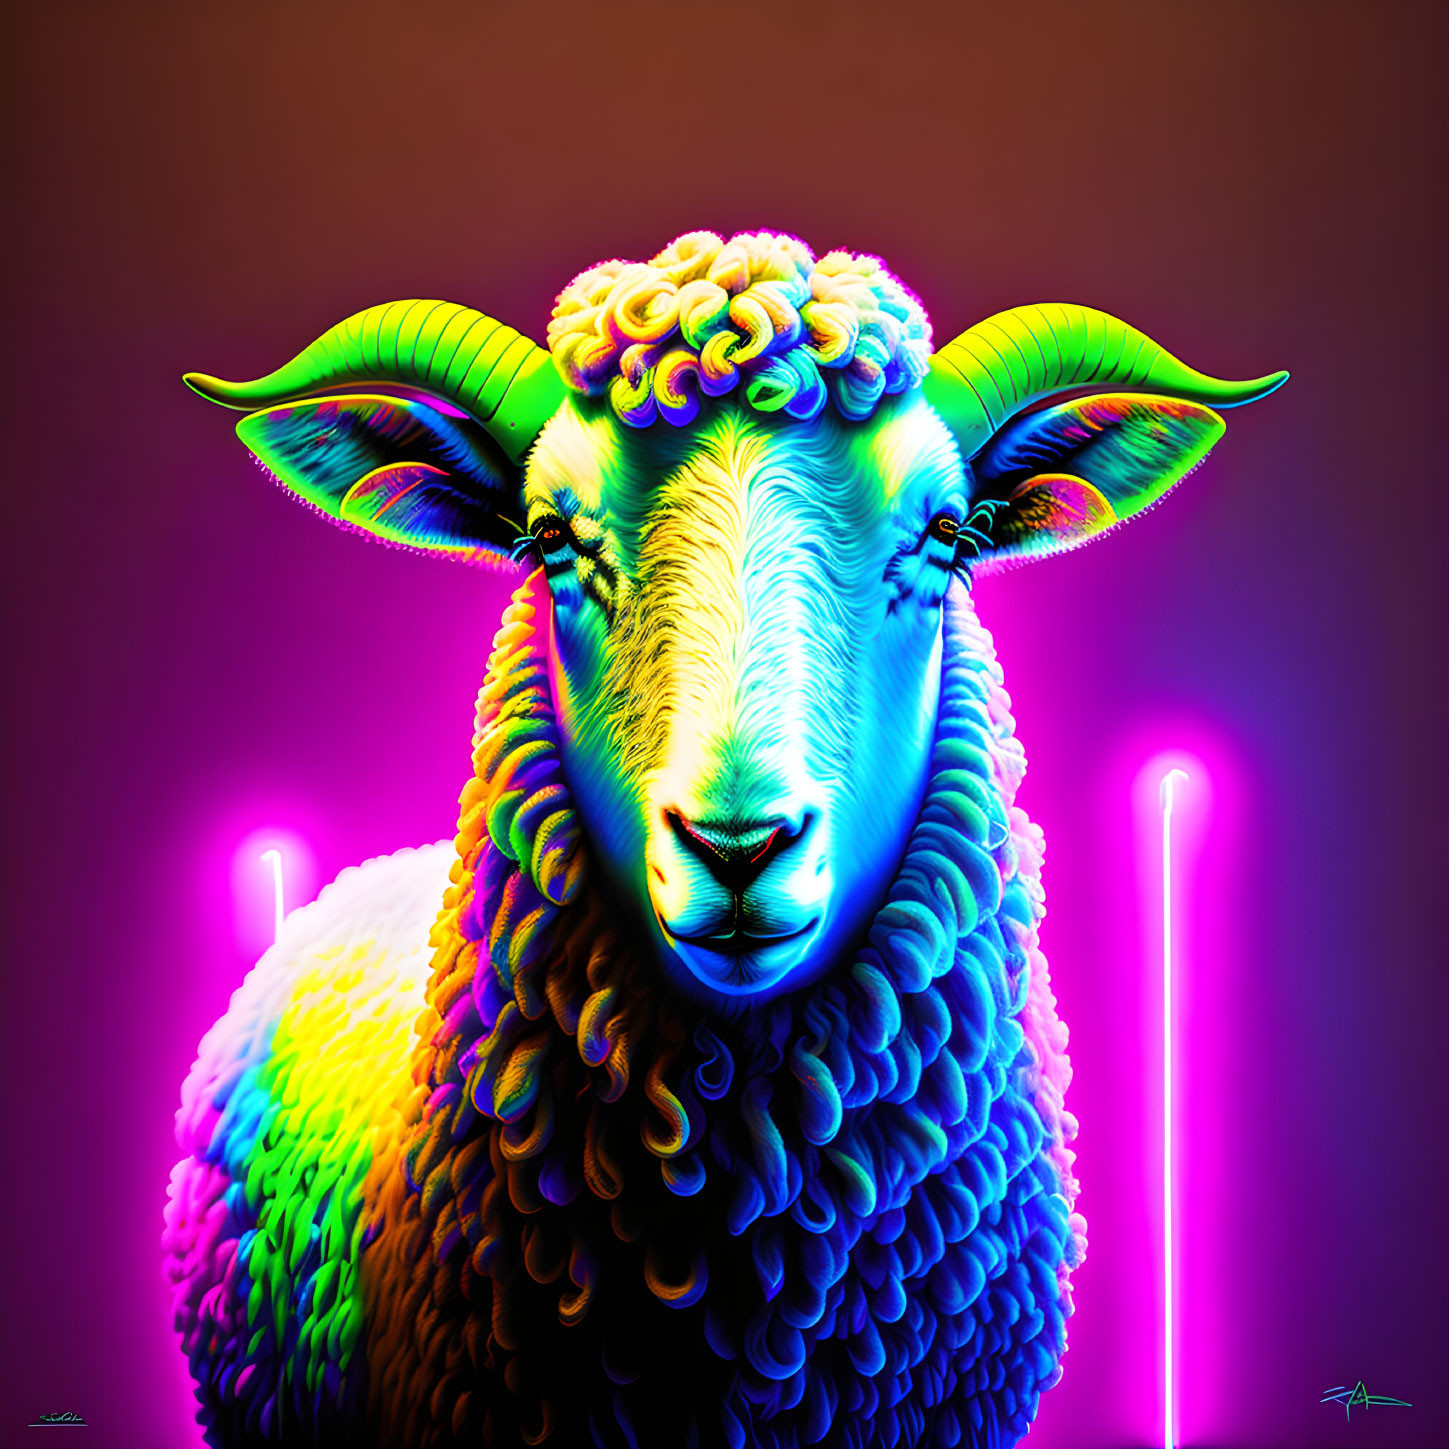  sheep, neon art